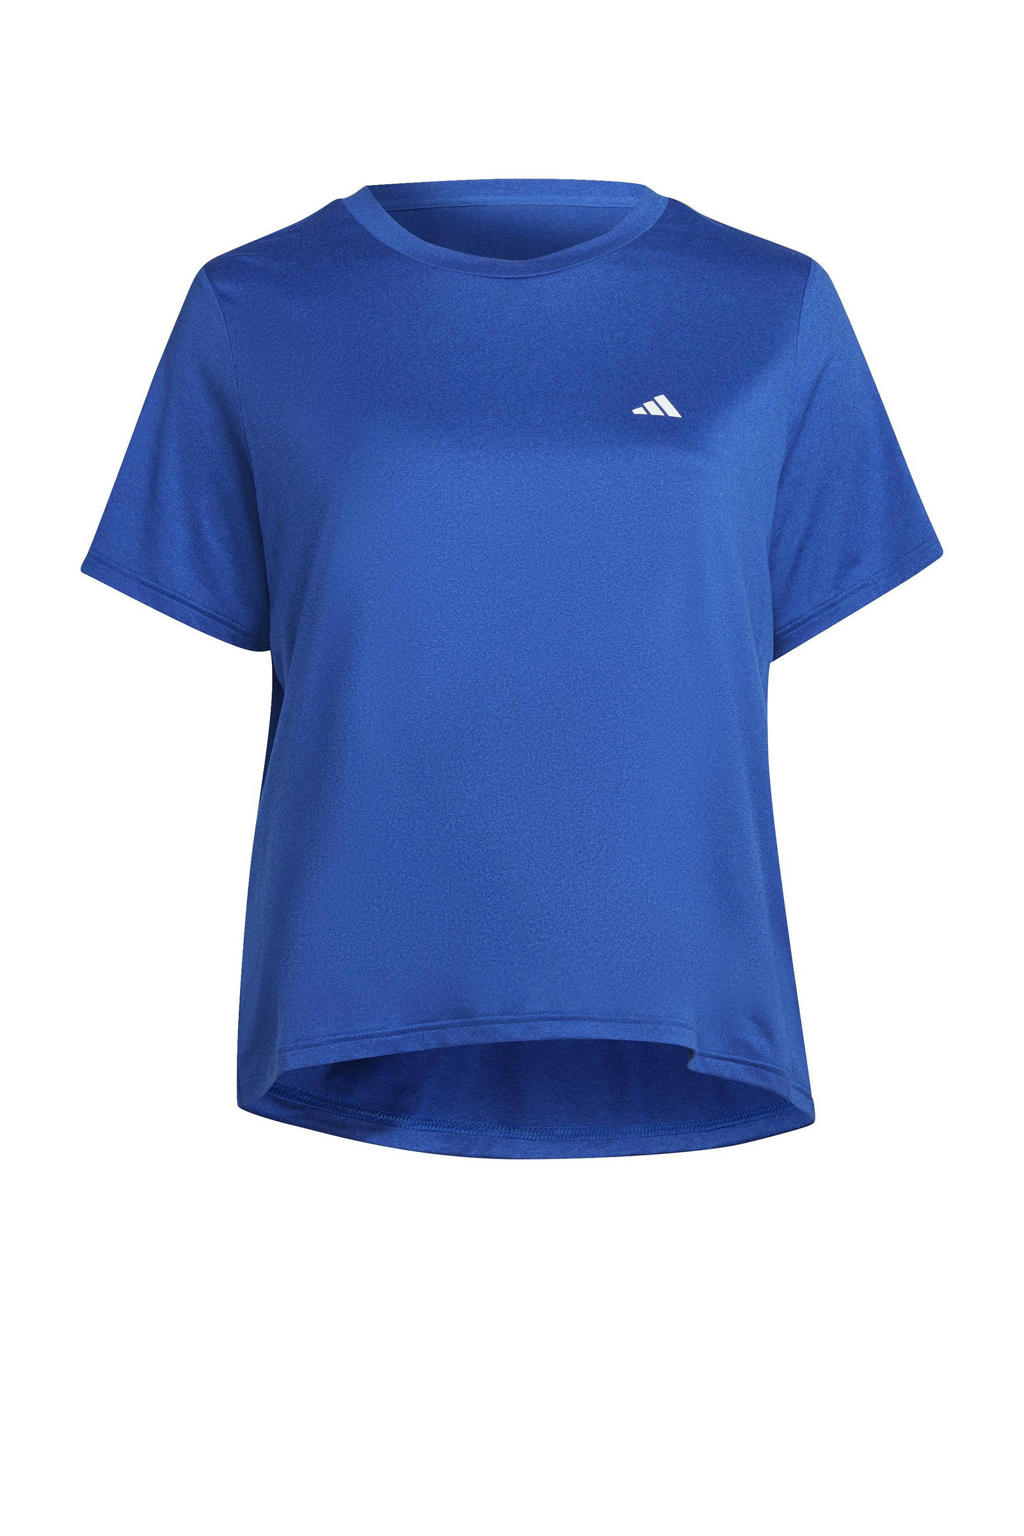 adidas Performance Plus Size sport T-shirt blauw